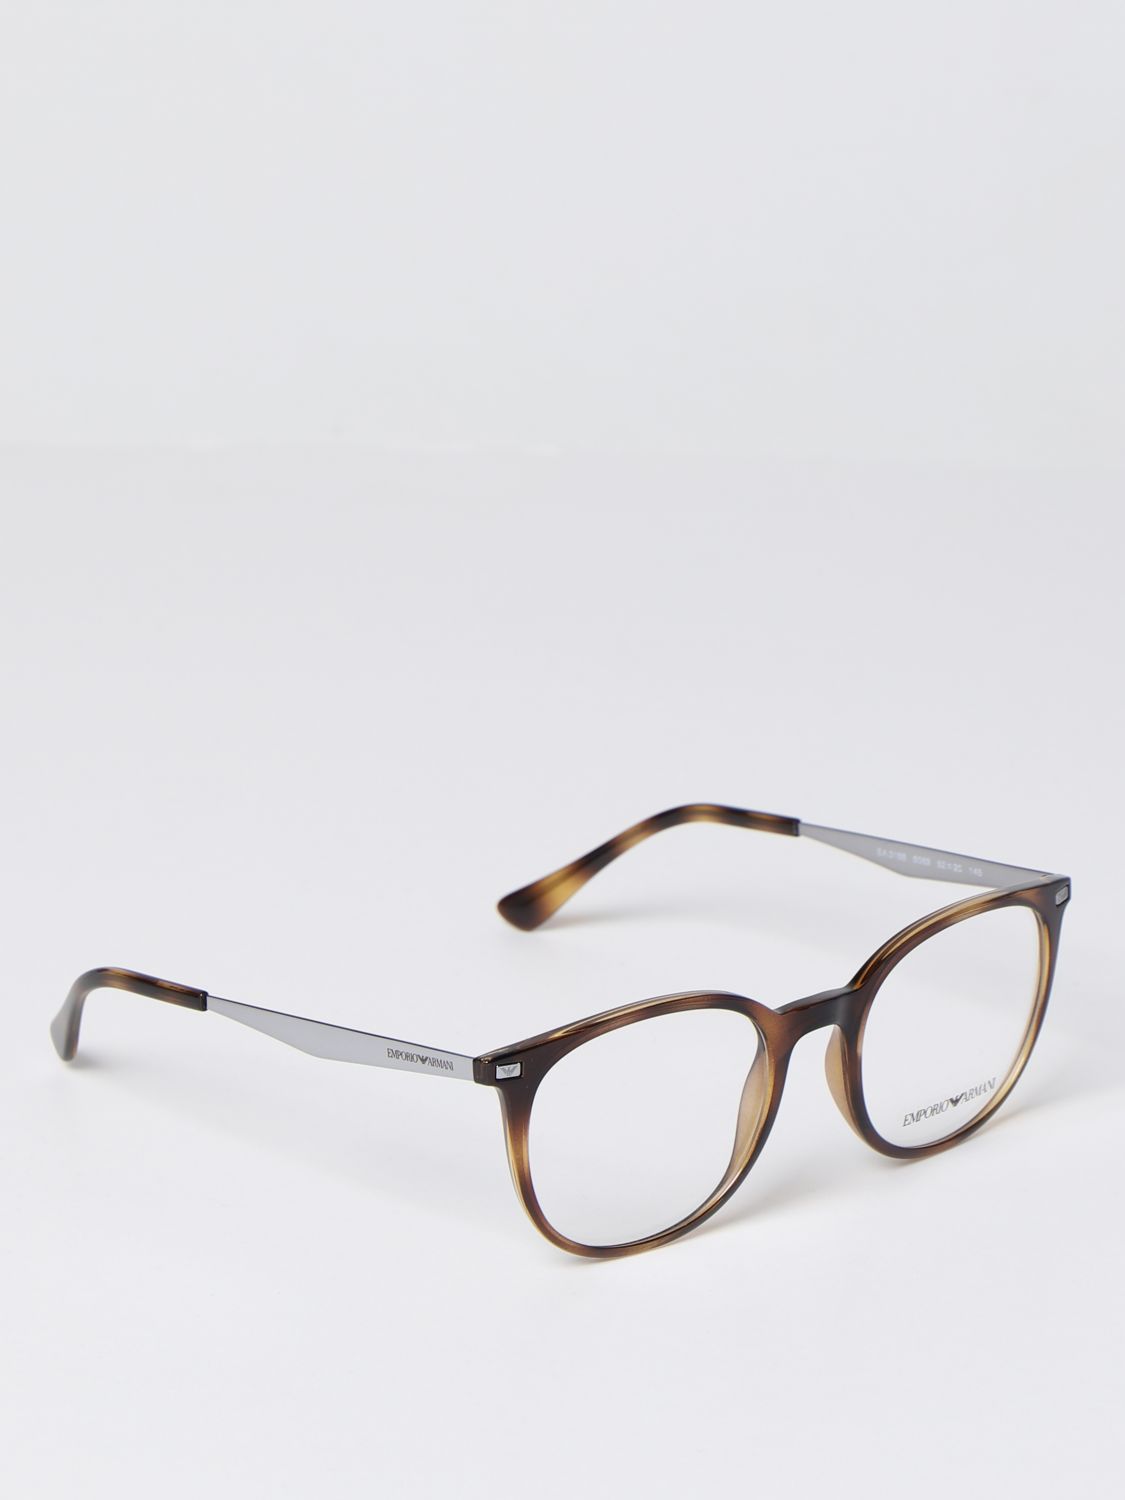 Glasses Emporio Armani: Emporio Armani eyeglasses in tortoiseshell acetate brown 1